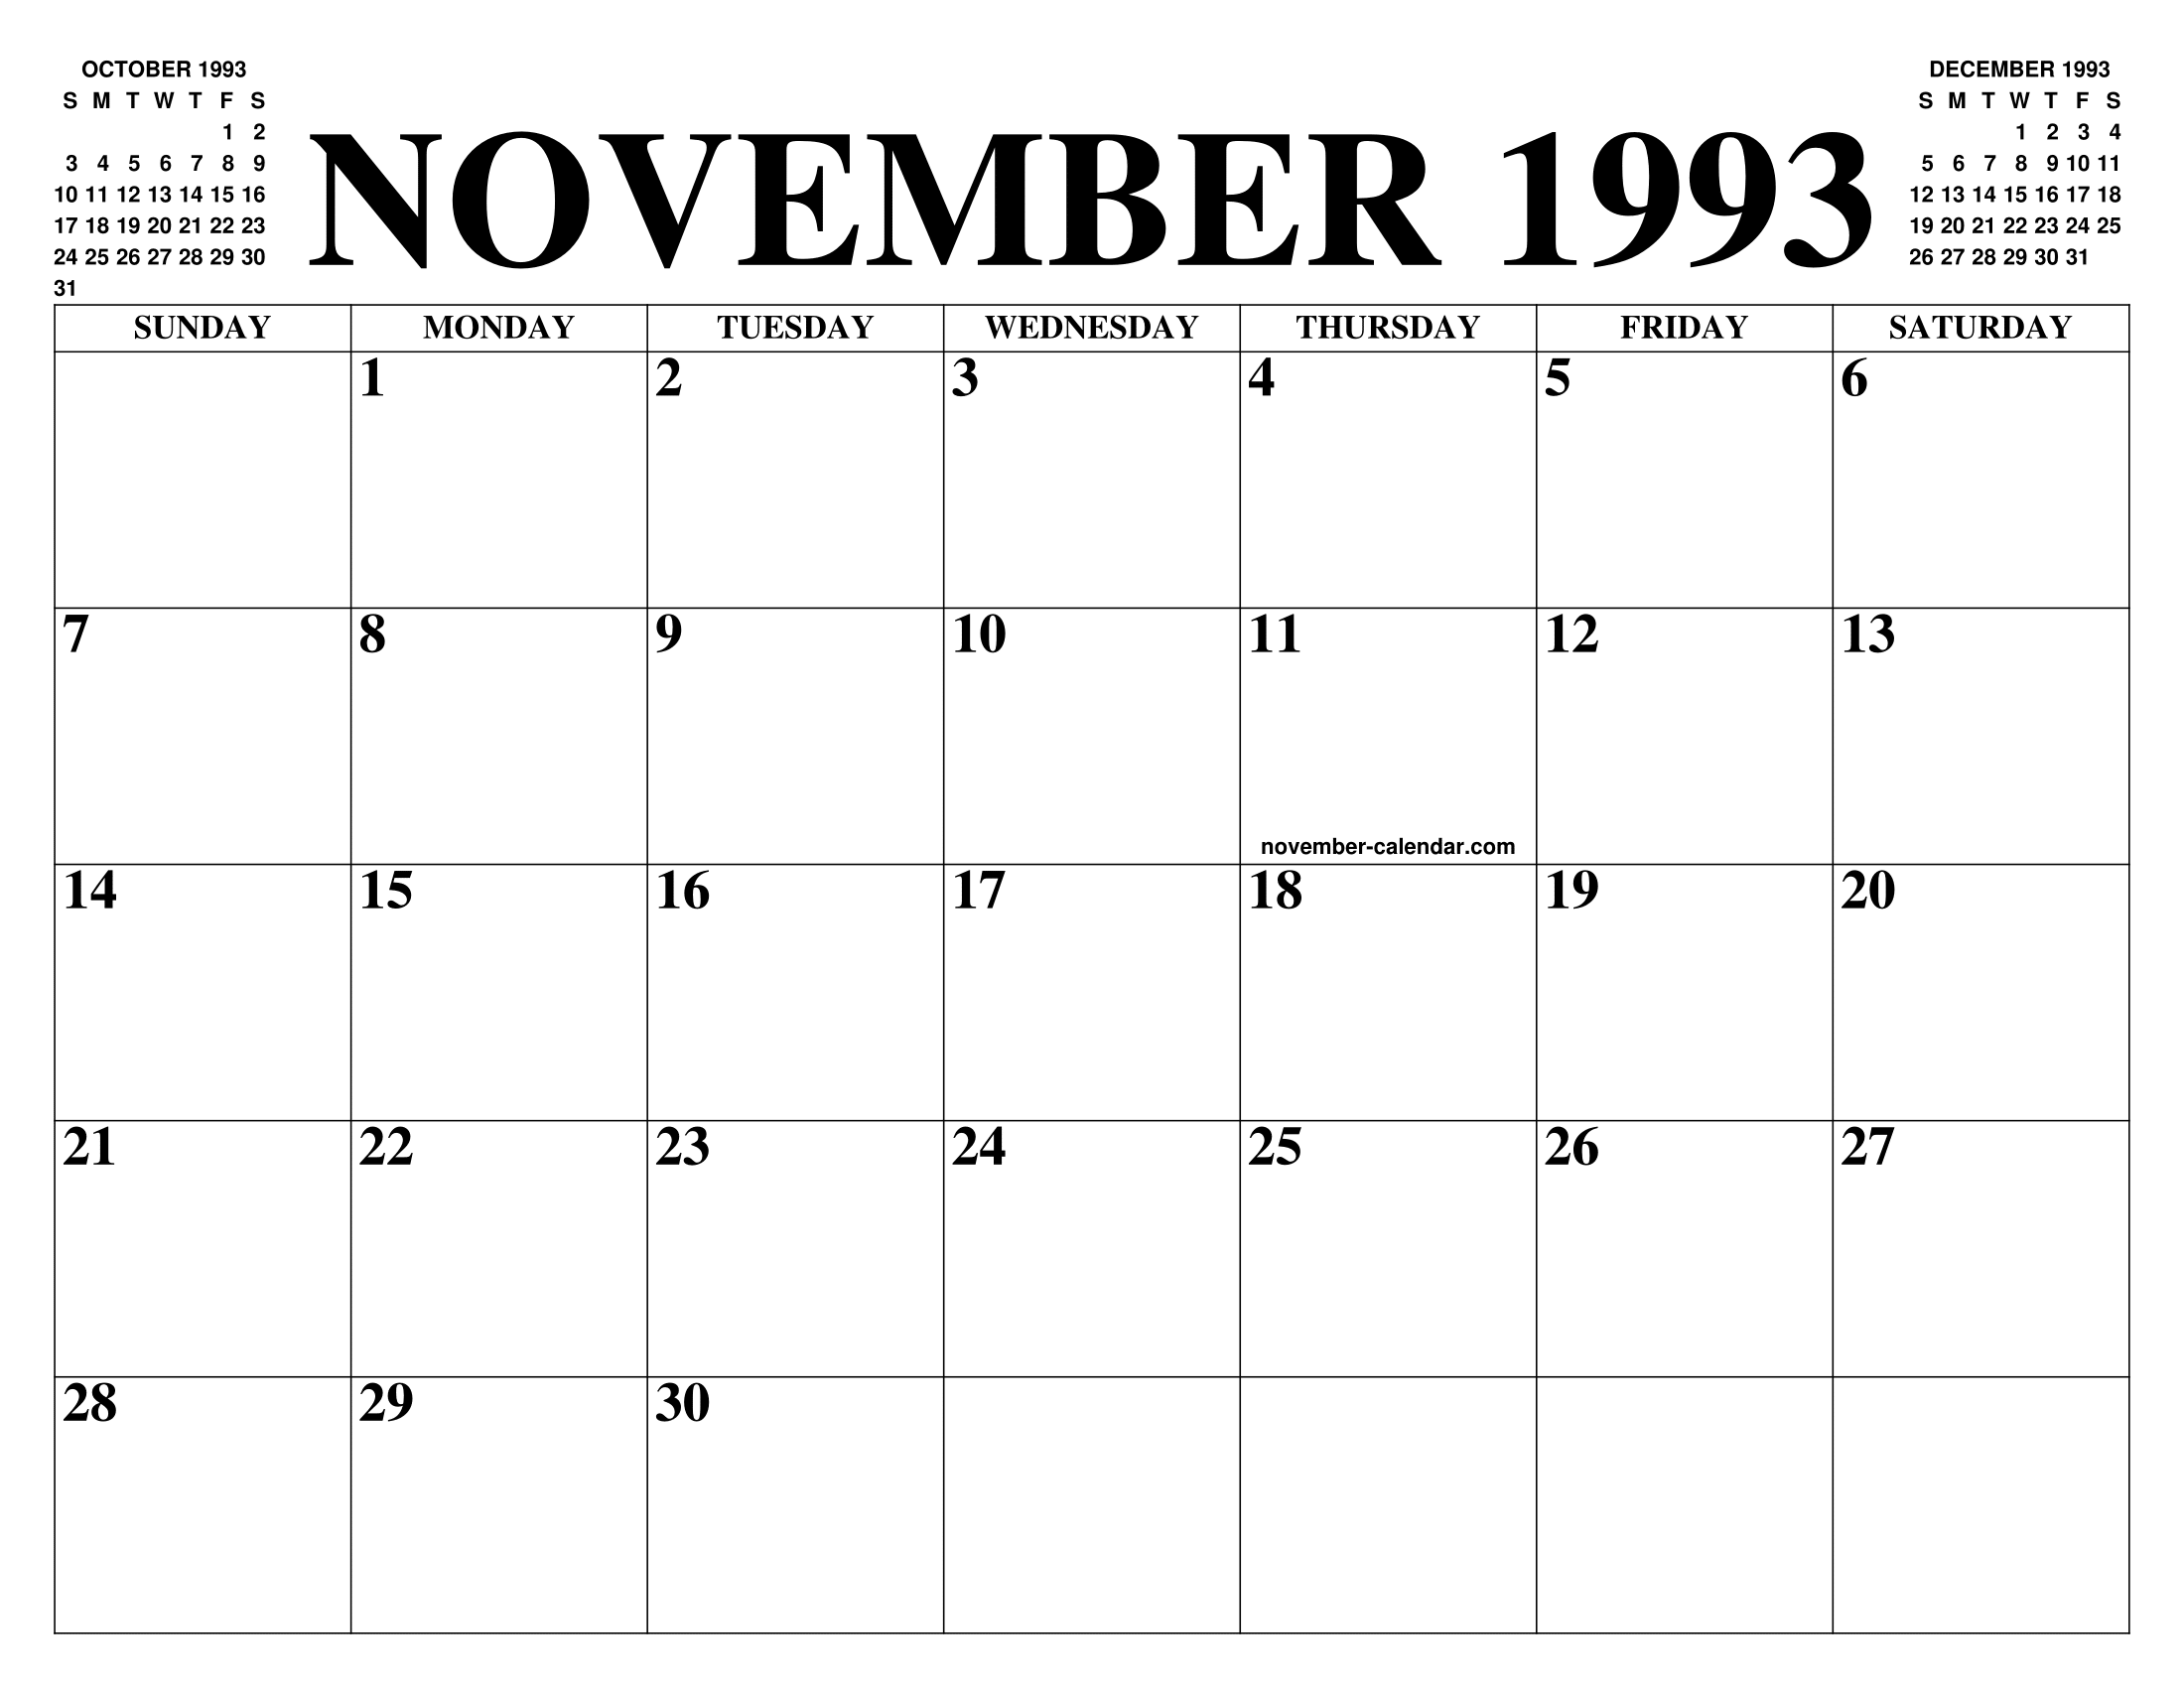 NOVEMBER 1993 CALENDAR OF THE MONTH: FREE PRINTABLE NOVEMBER CALENDAR